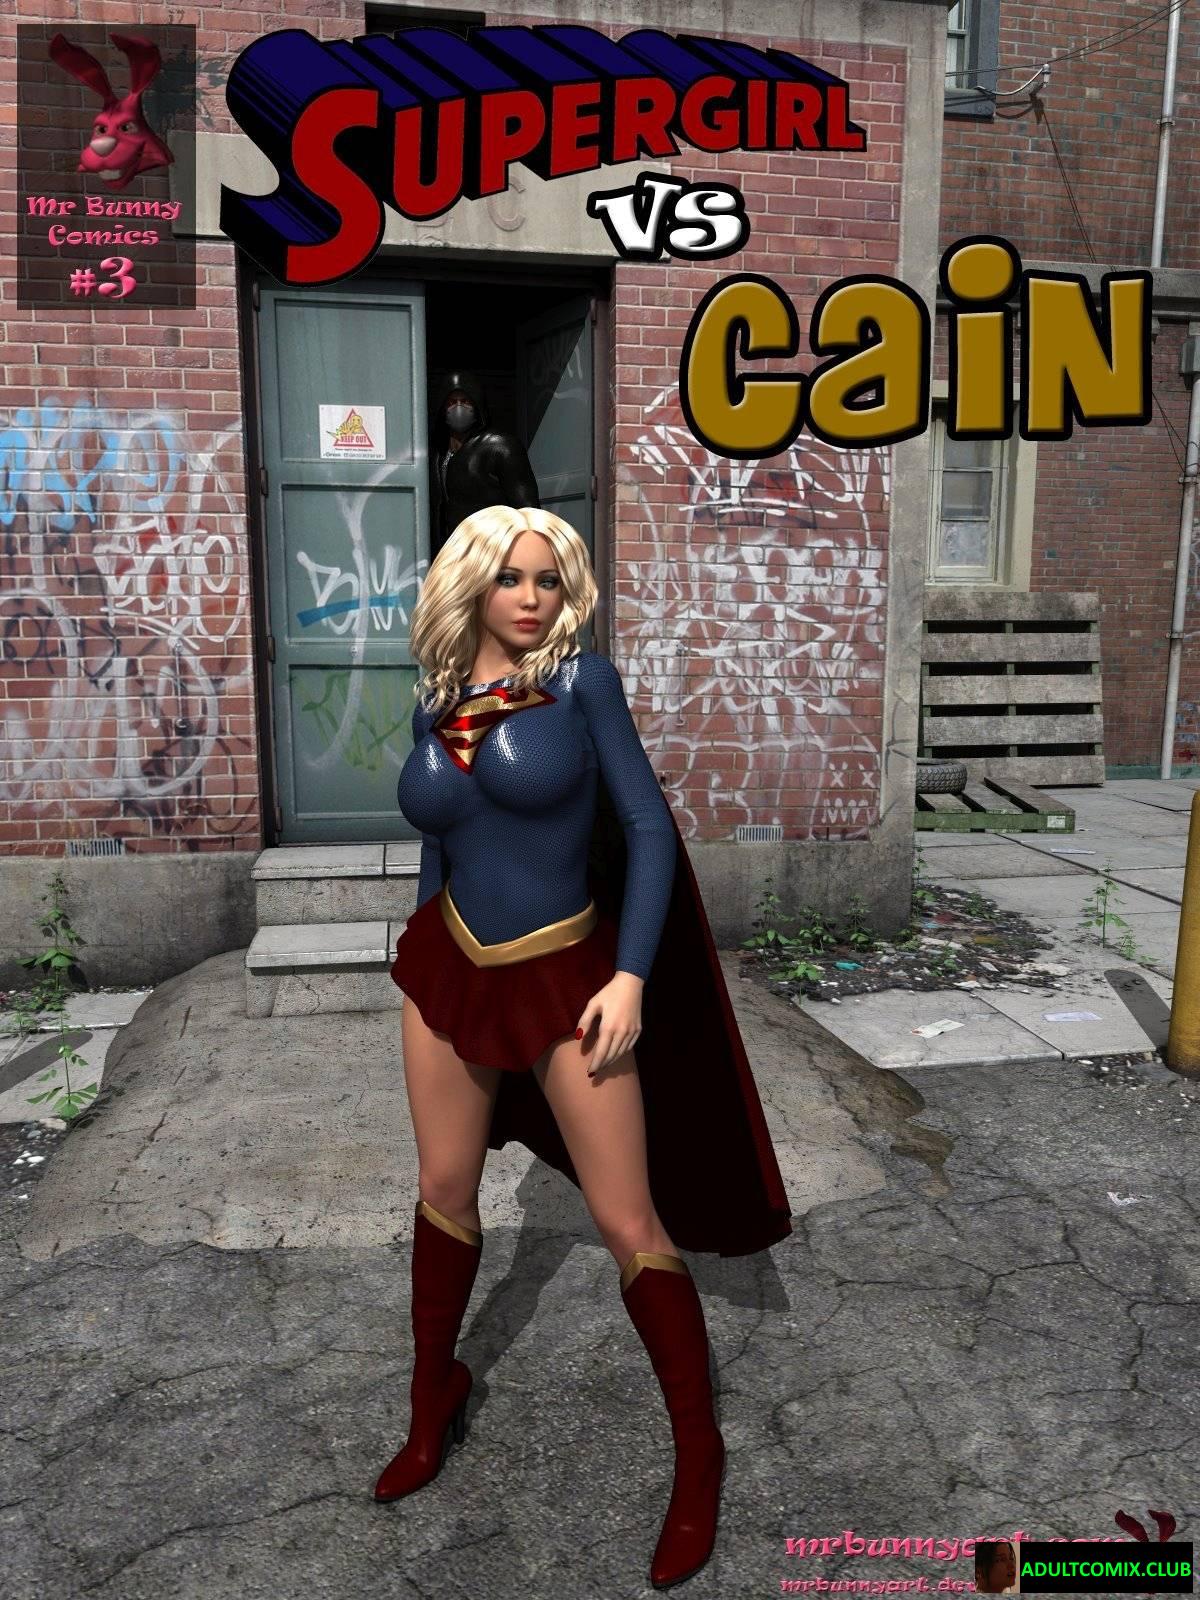 Supergirl vs Cain